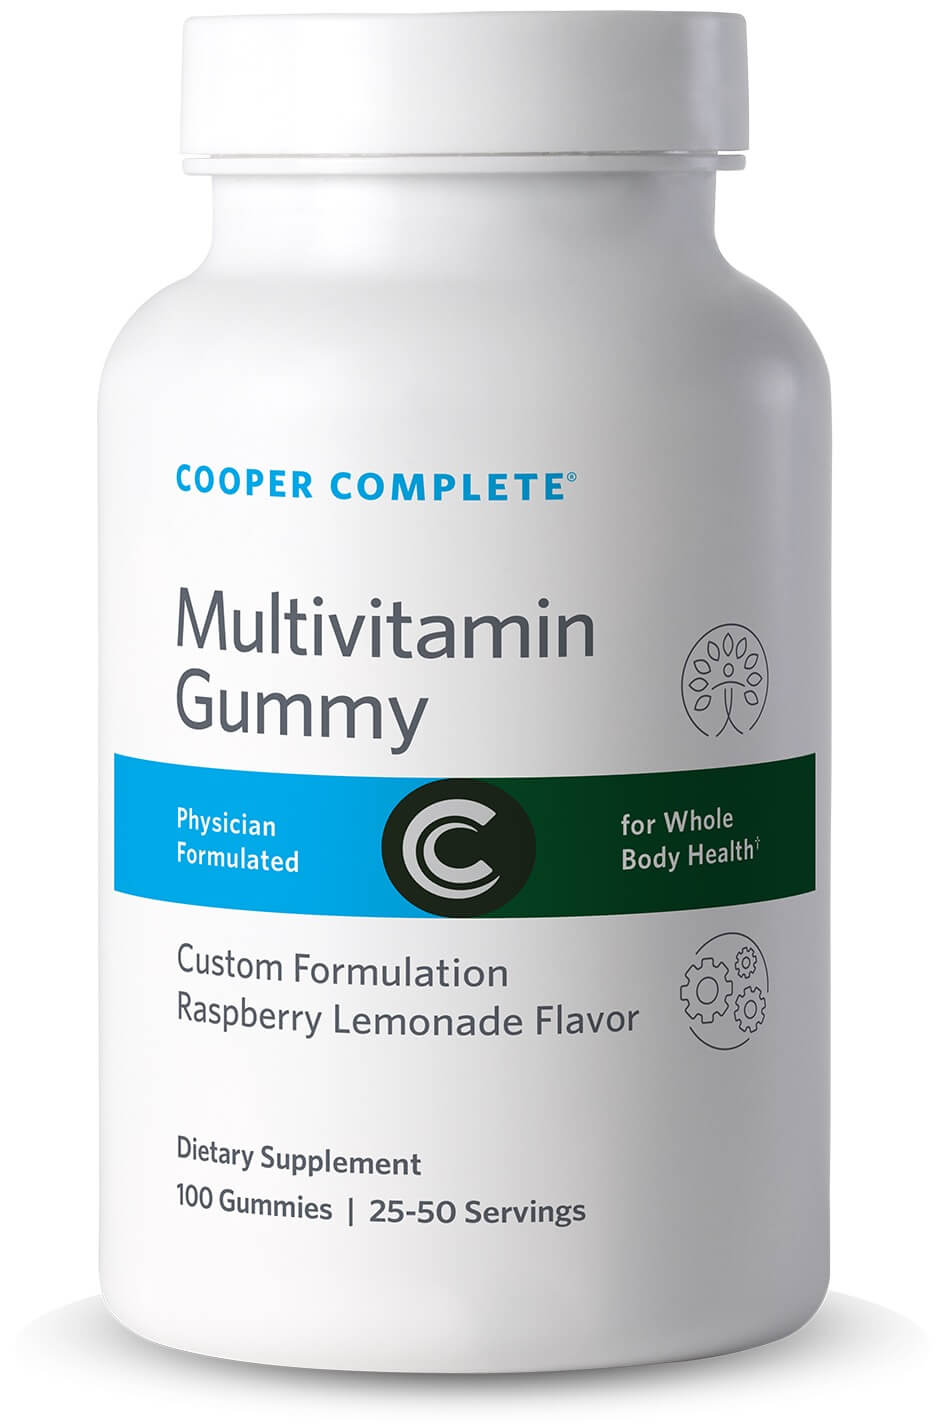 Photo of Cooper Complete Multivitamin Gummy Supplement bottle.